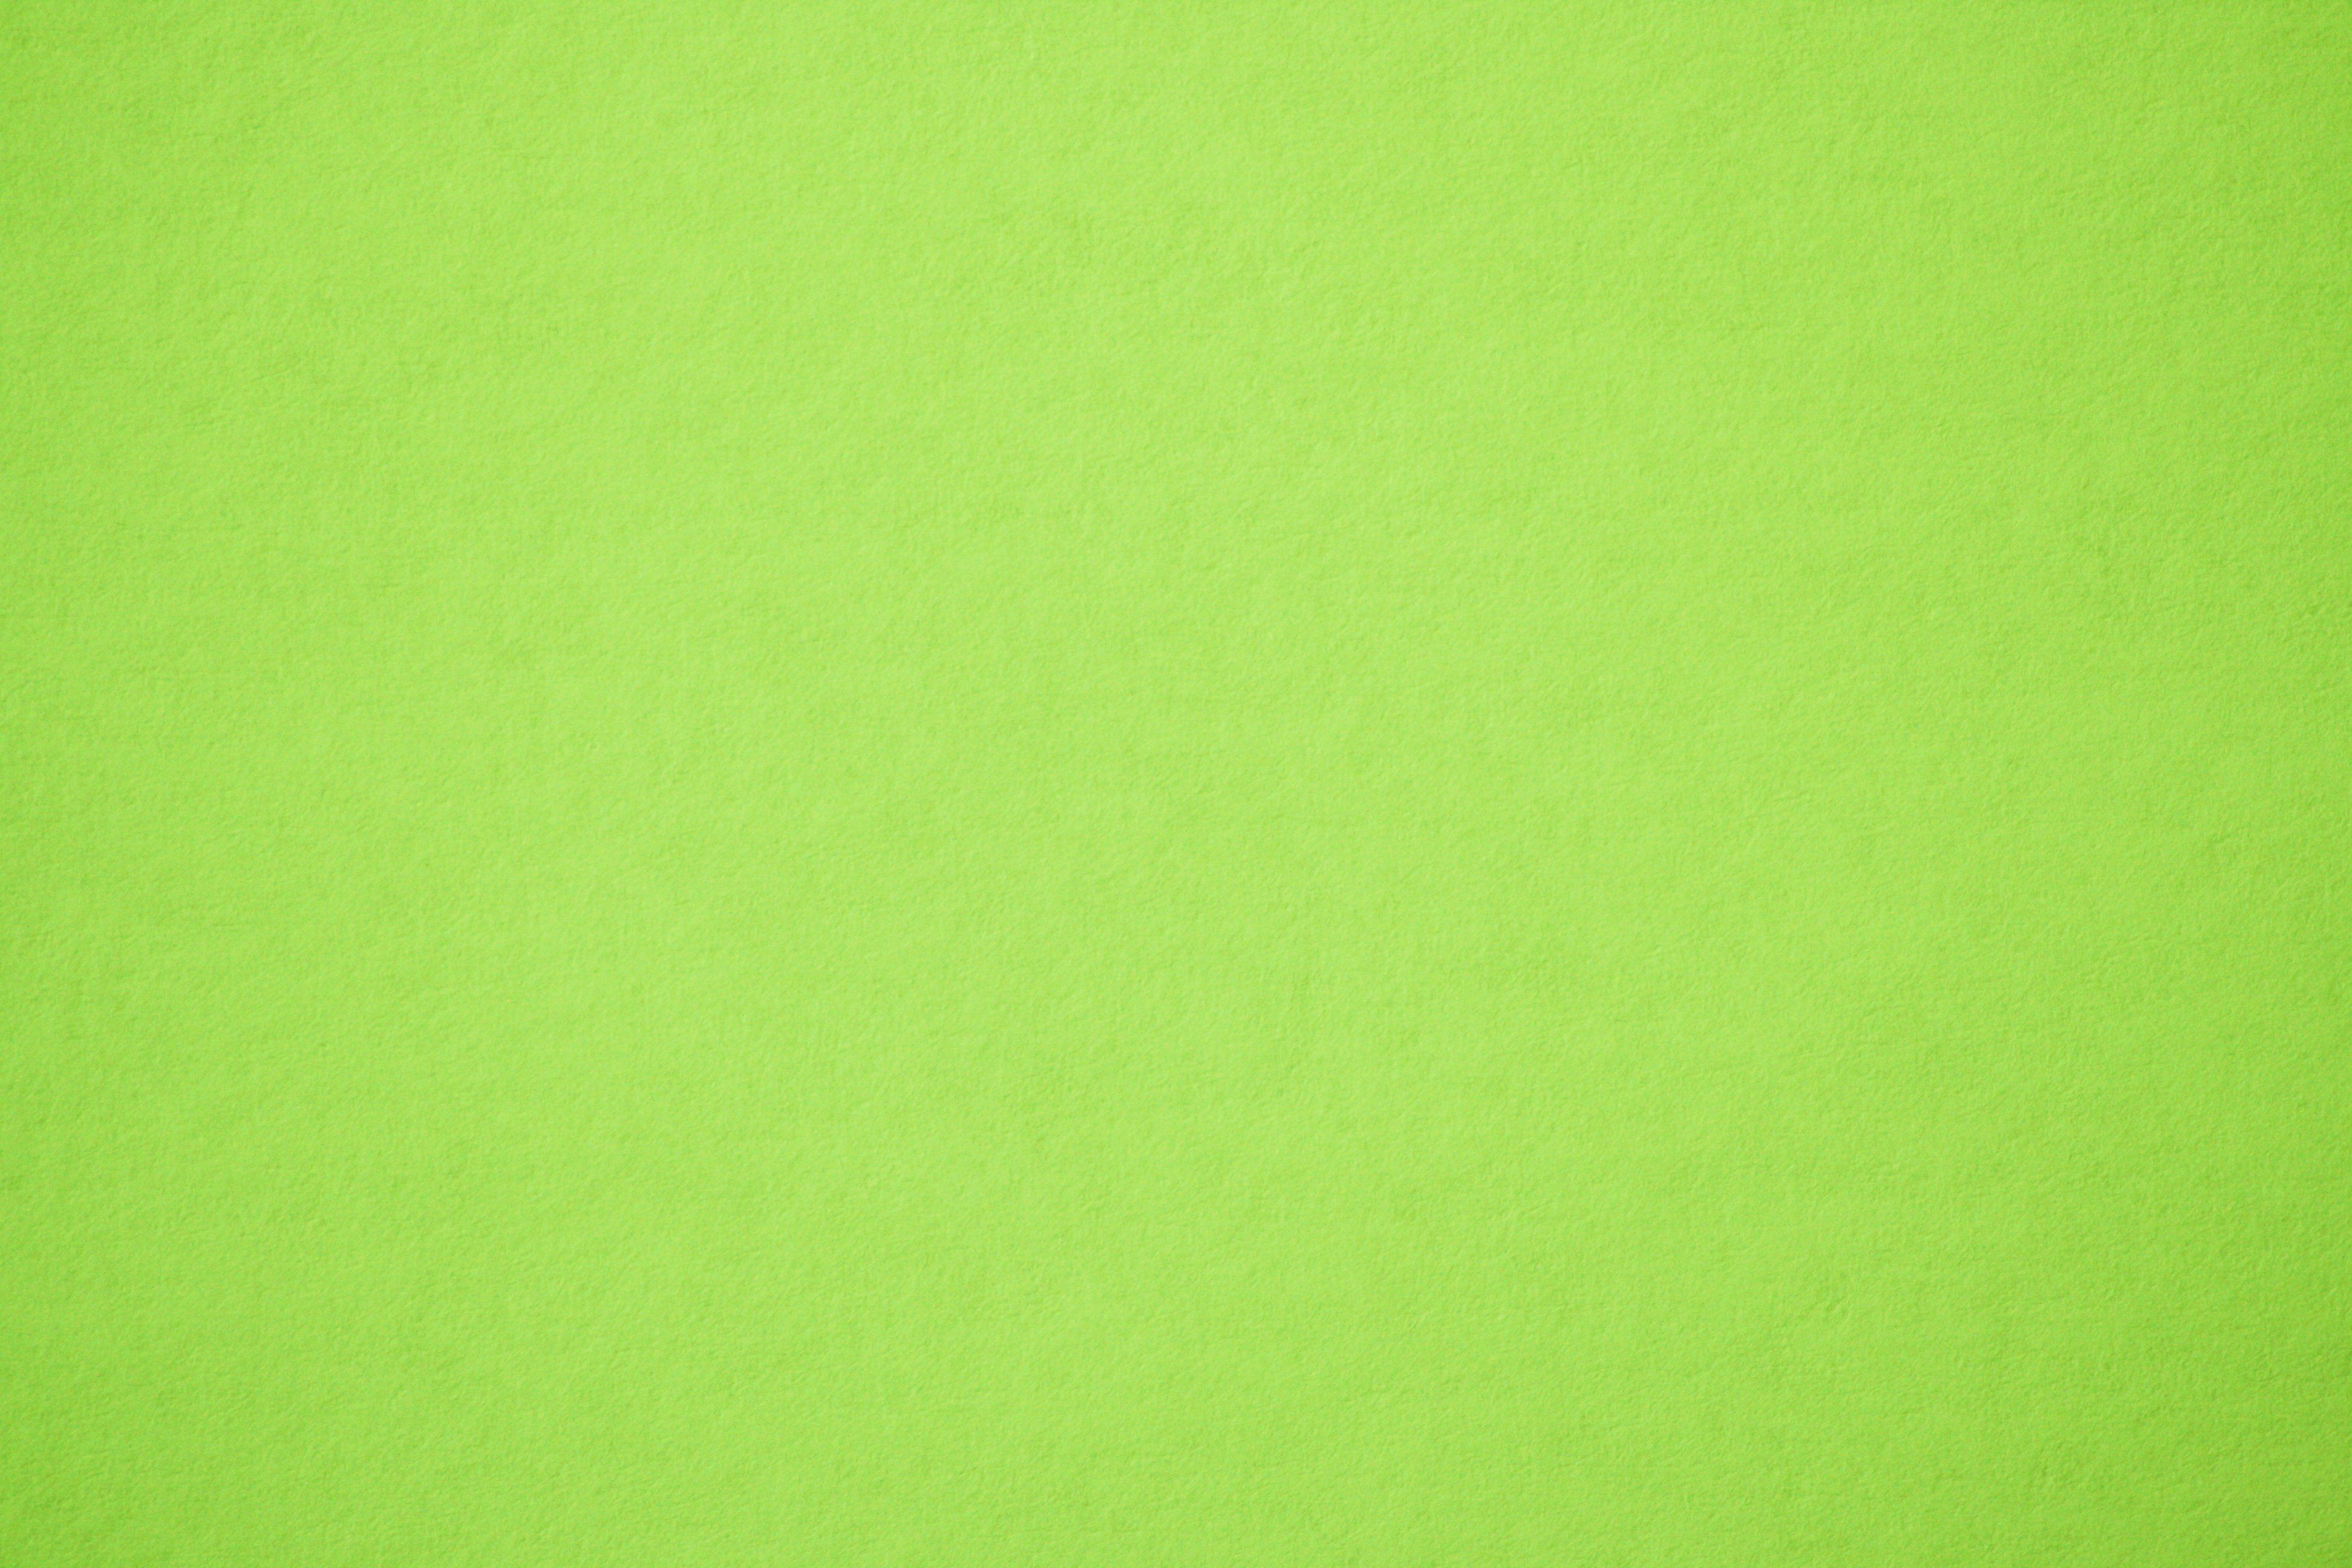 Lime Green Paper Texture Picture Free Photograph Photos Public Domain